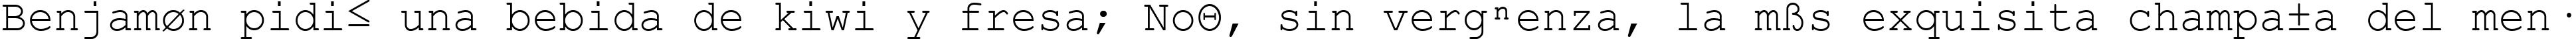 Пример написания шрифтом MS LineDraw текста на испанском